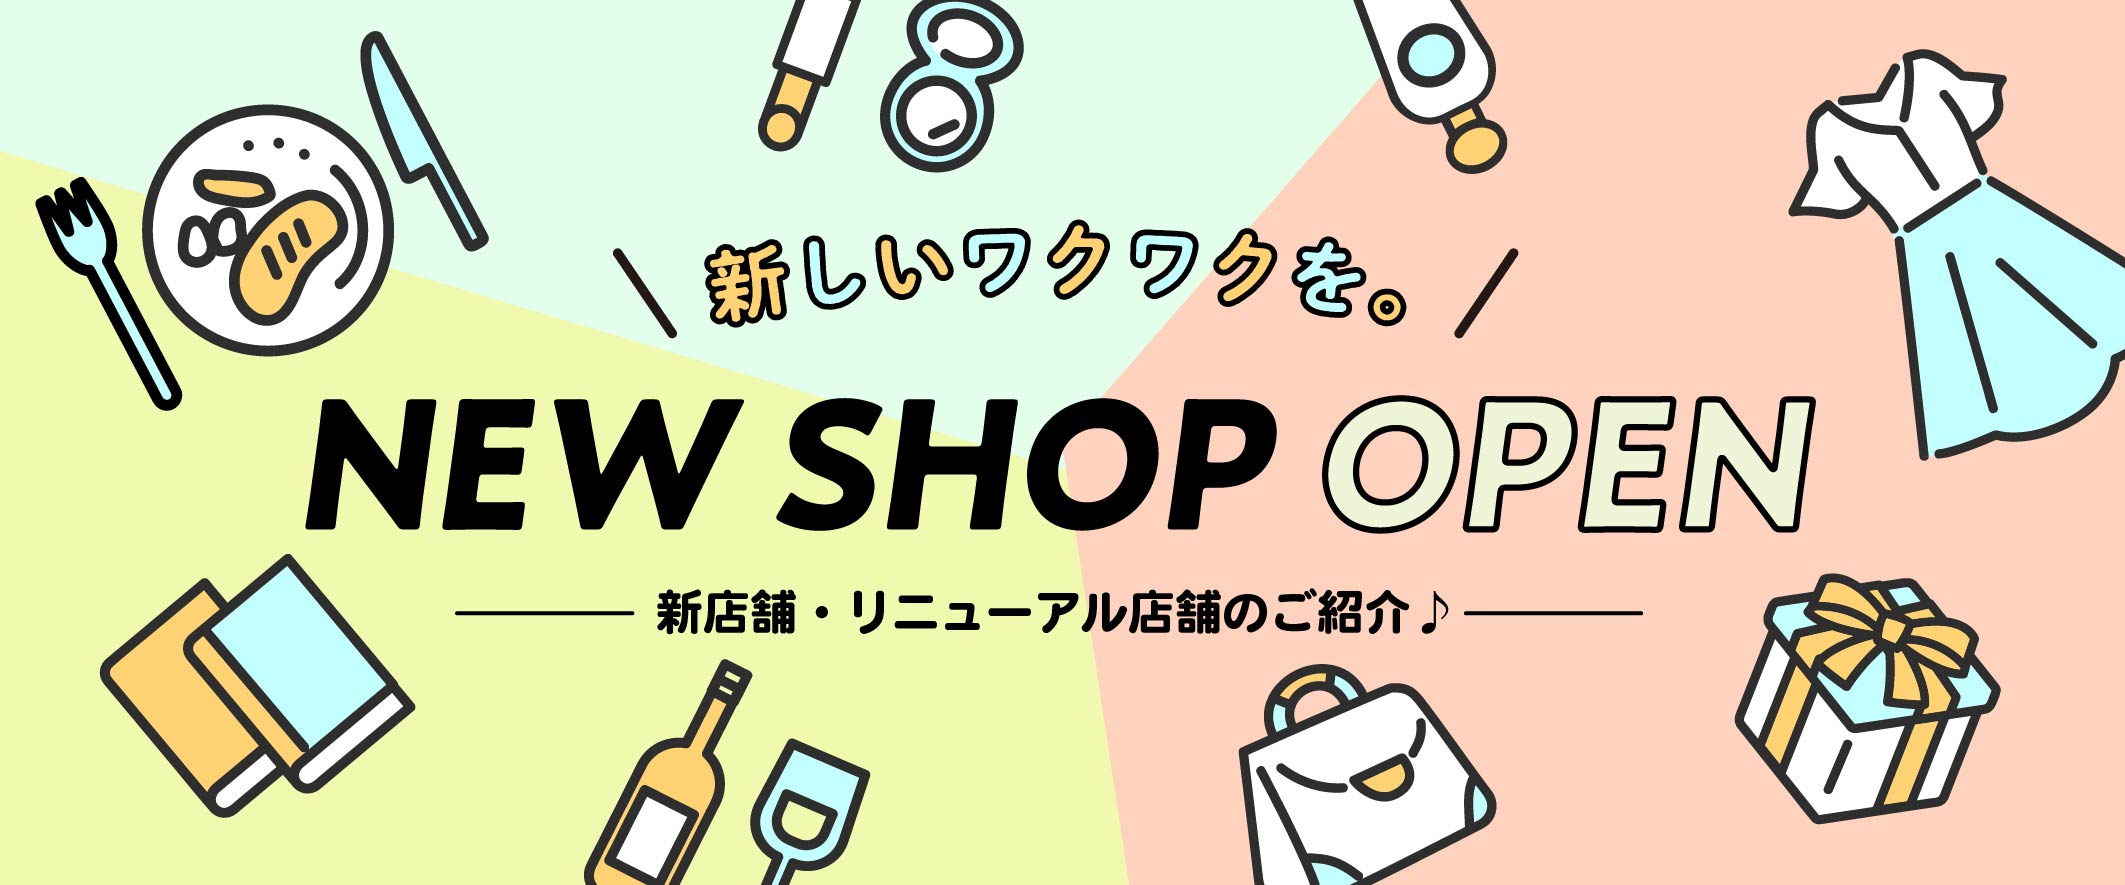 NEW SHOP OPEN ―新店舗・リニューアル店舗のご紹介―